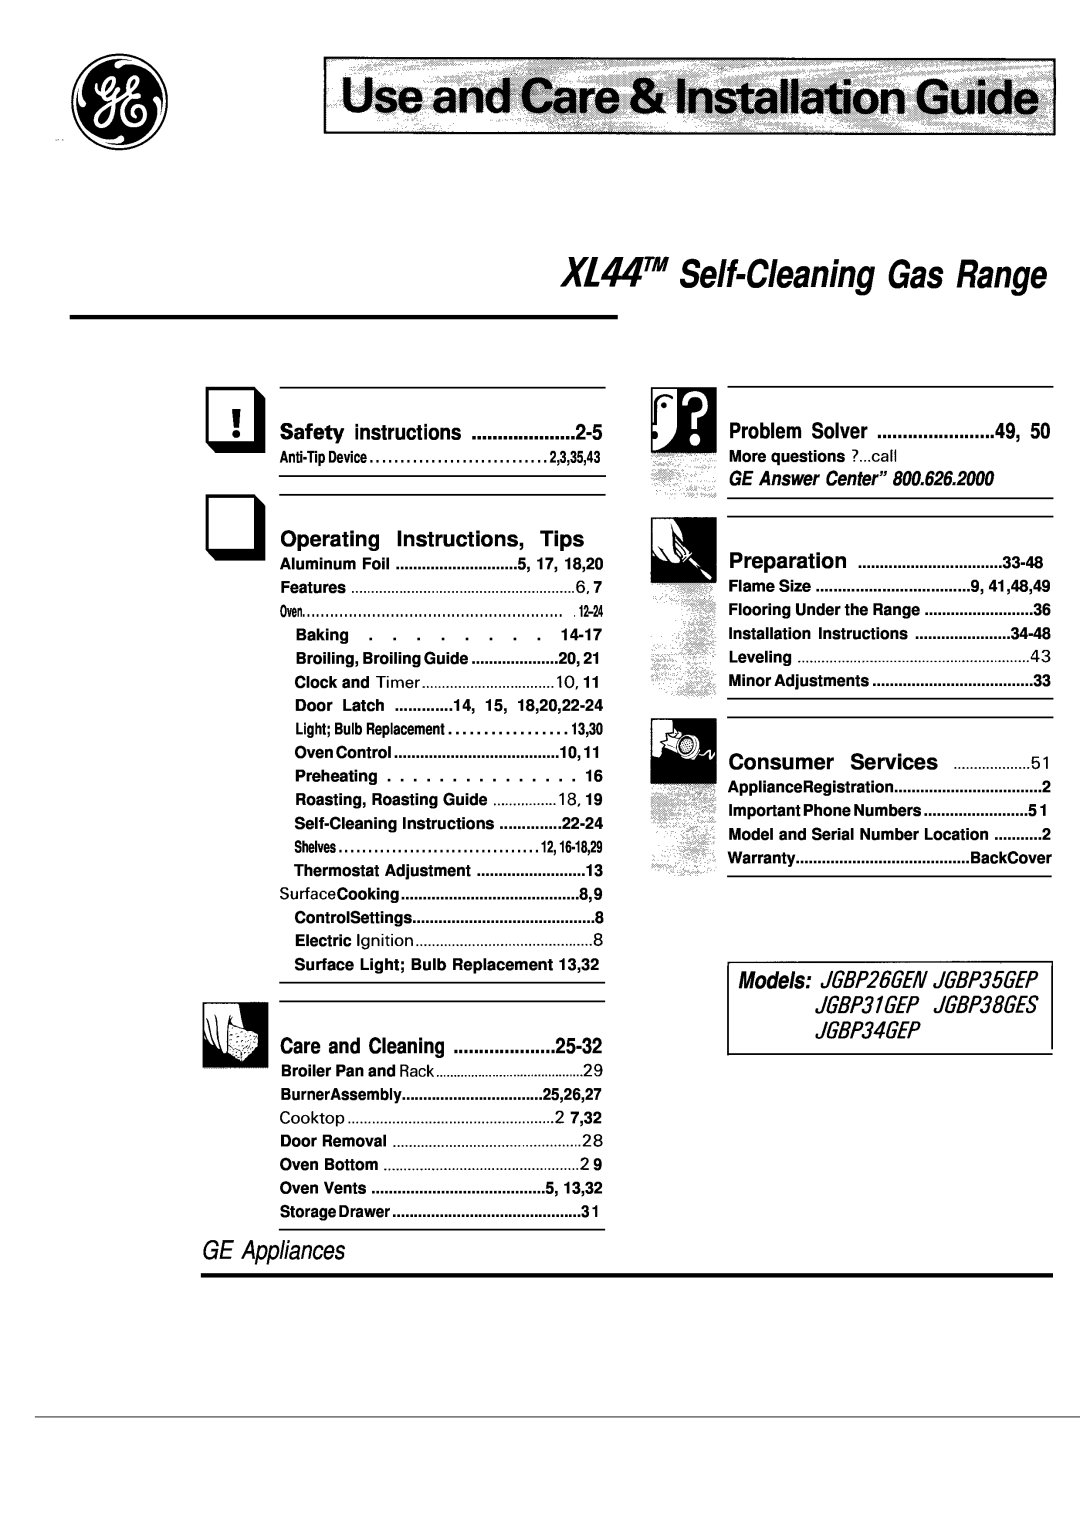 GE JGBP35GEP manual GE Appliances, JGBP34GEP, Operating Instructions, Tips, XIMT” Self-Cleaning Gas Range, Problem Solver 